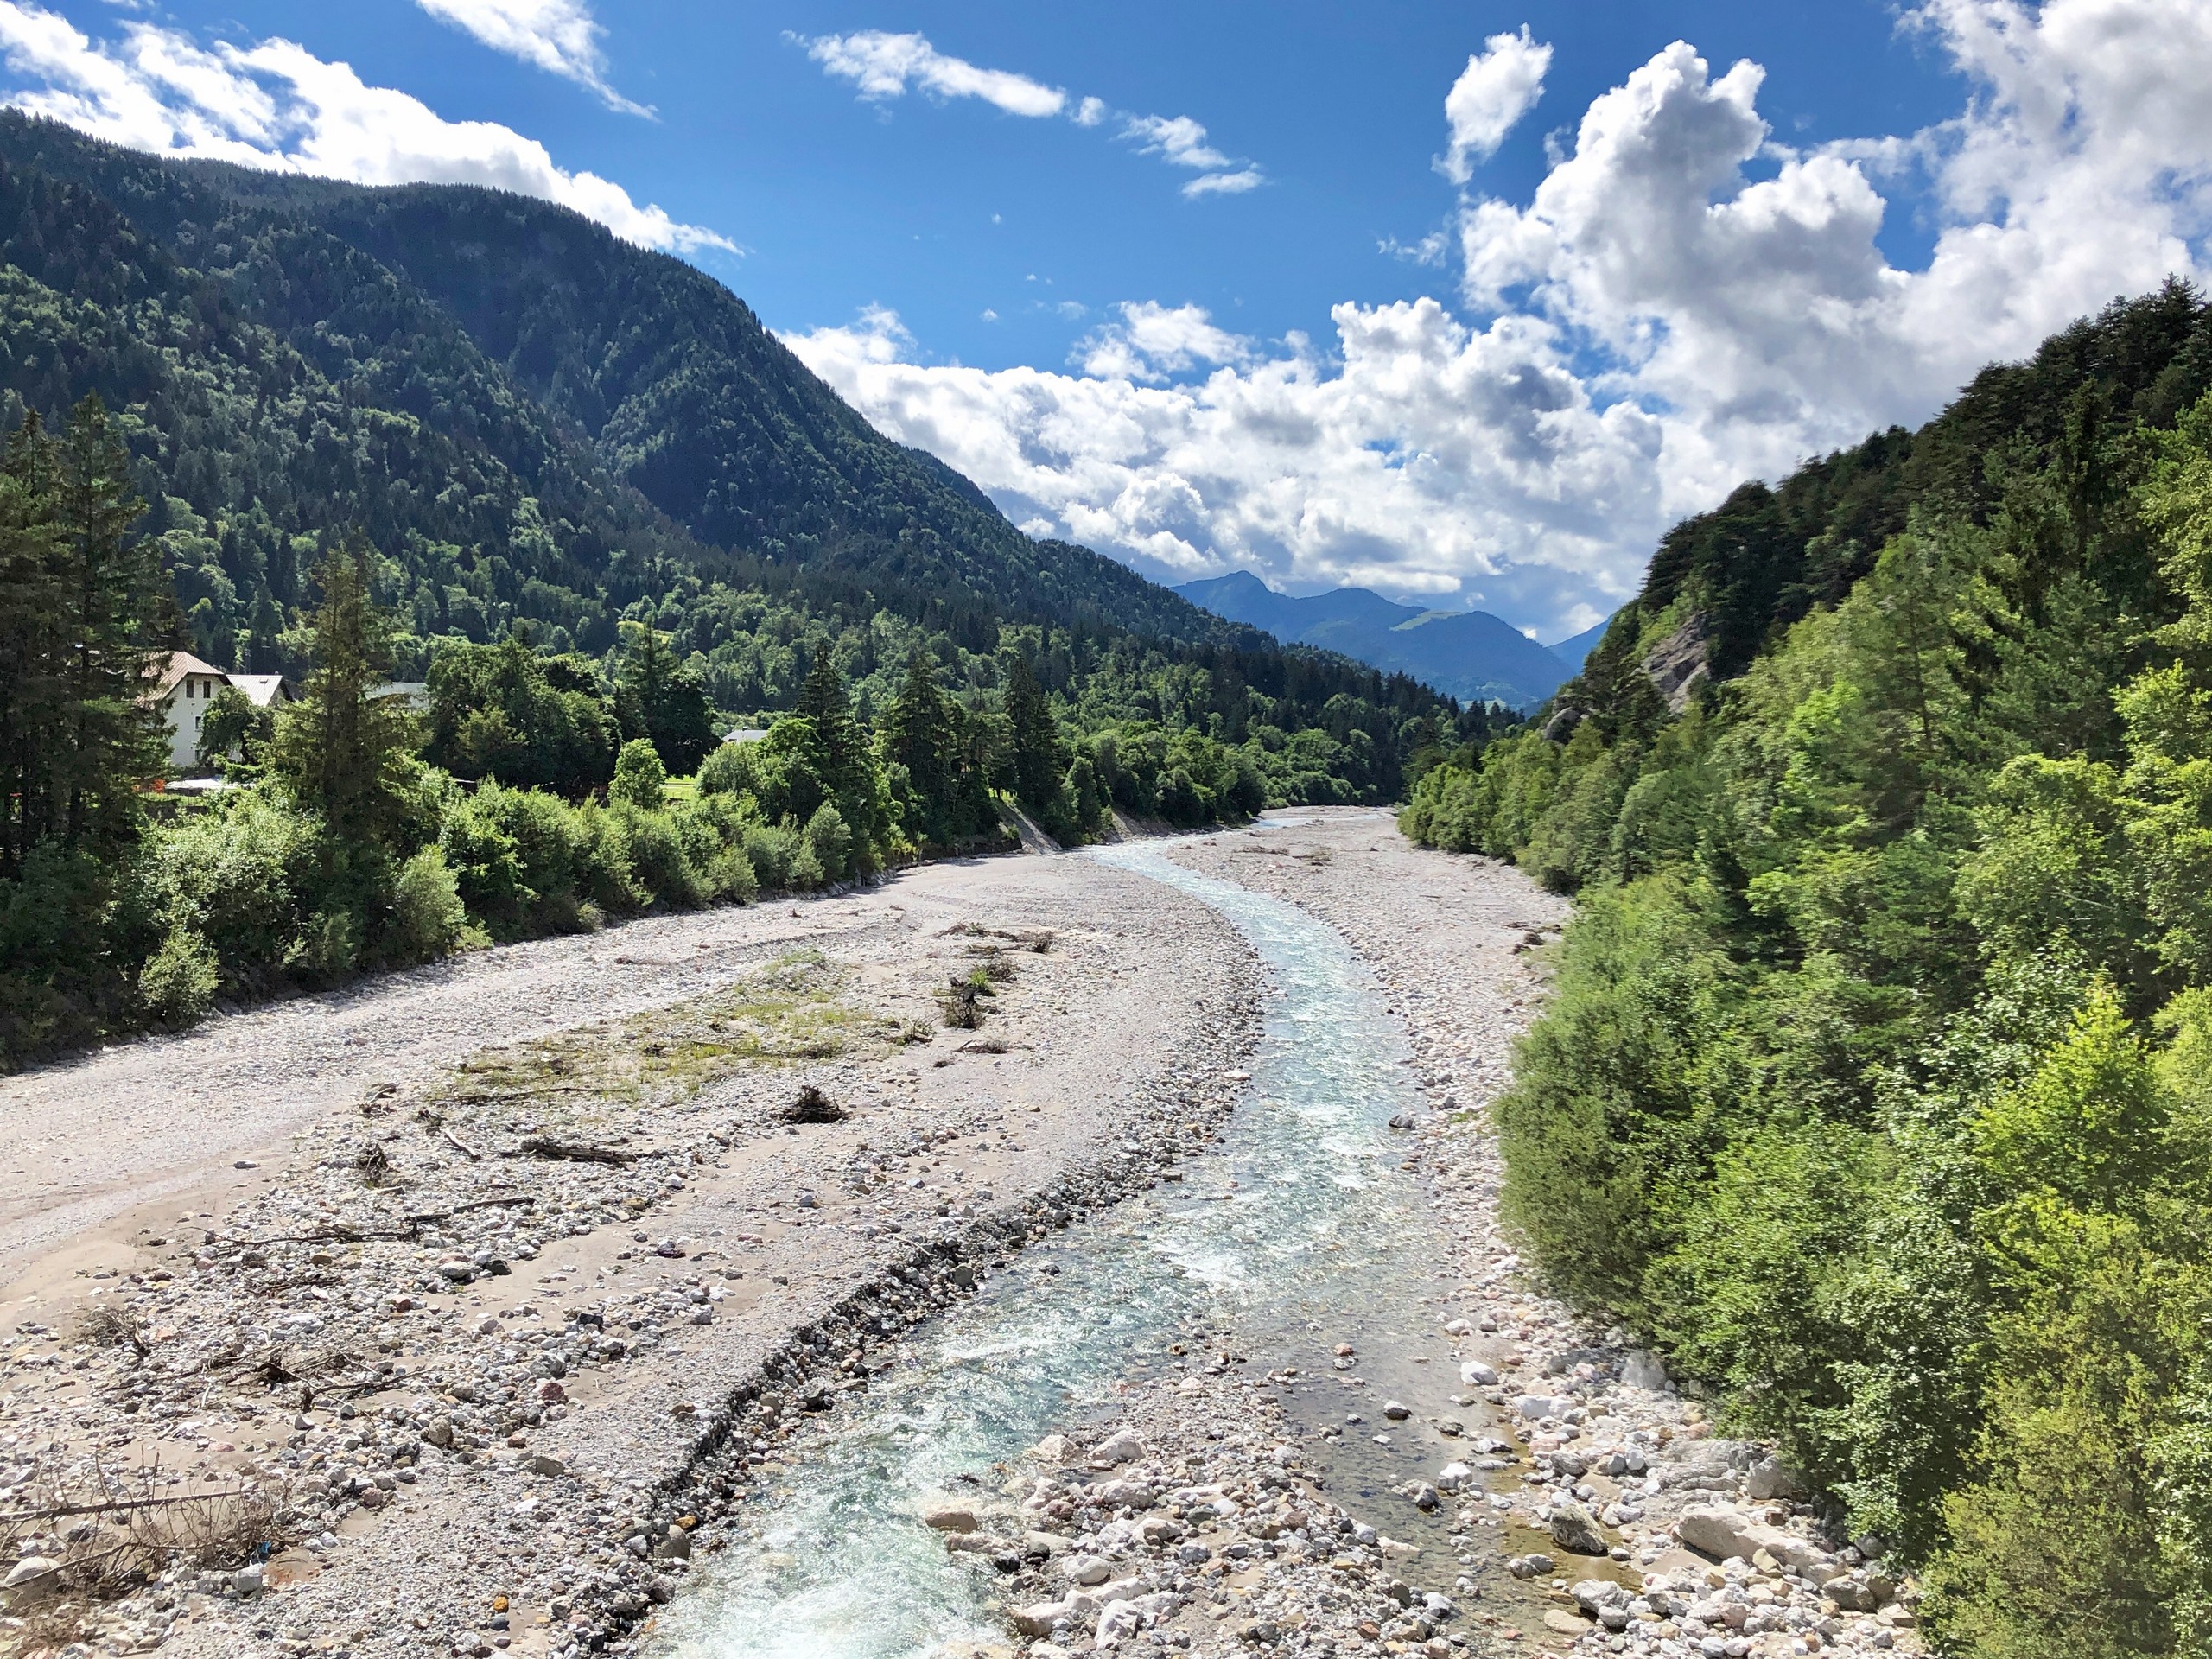 Riverbend seen while biking the Alpe Adria path